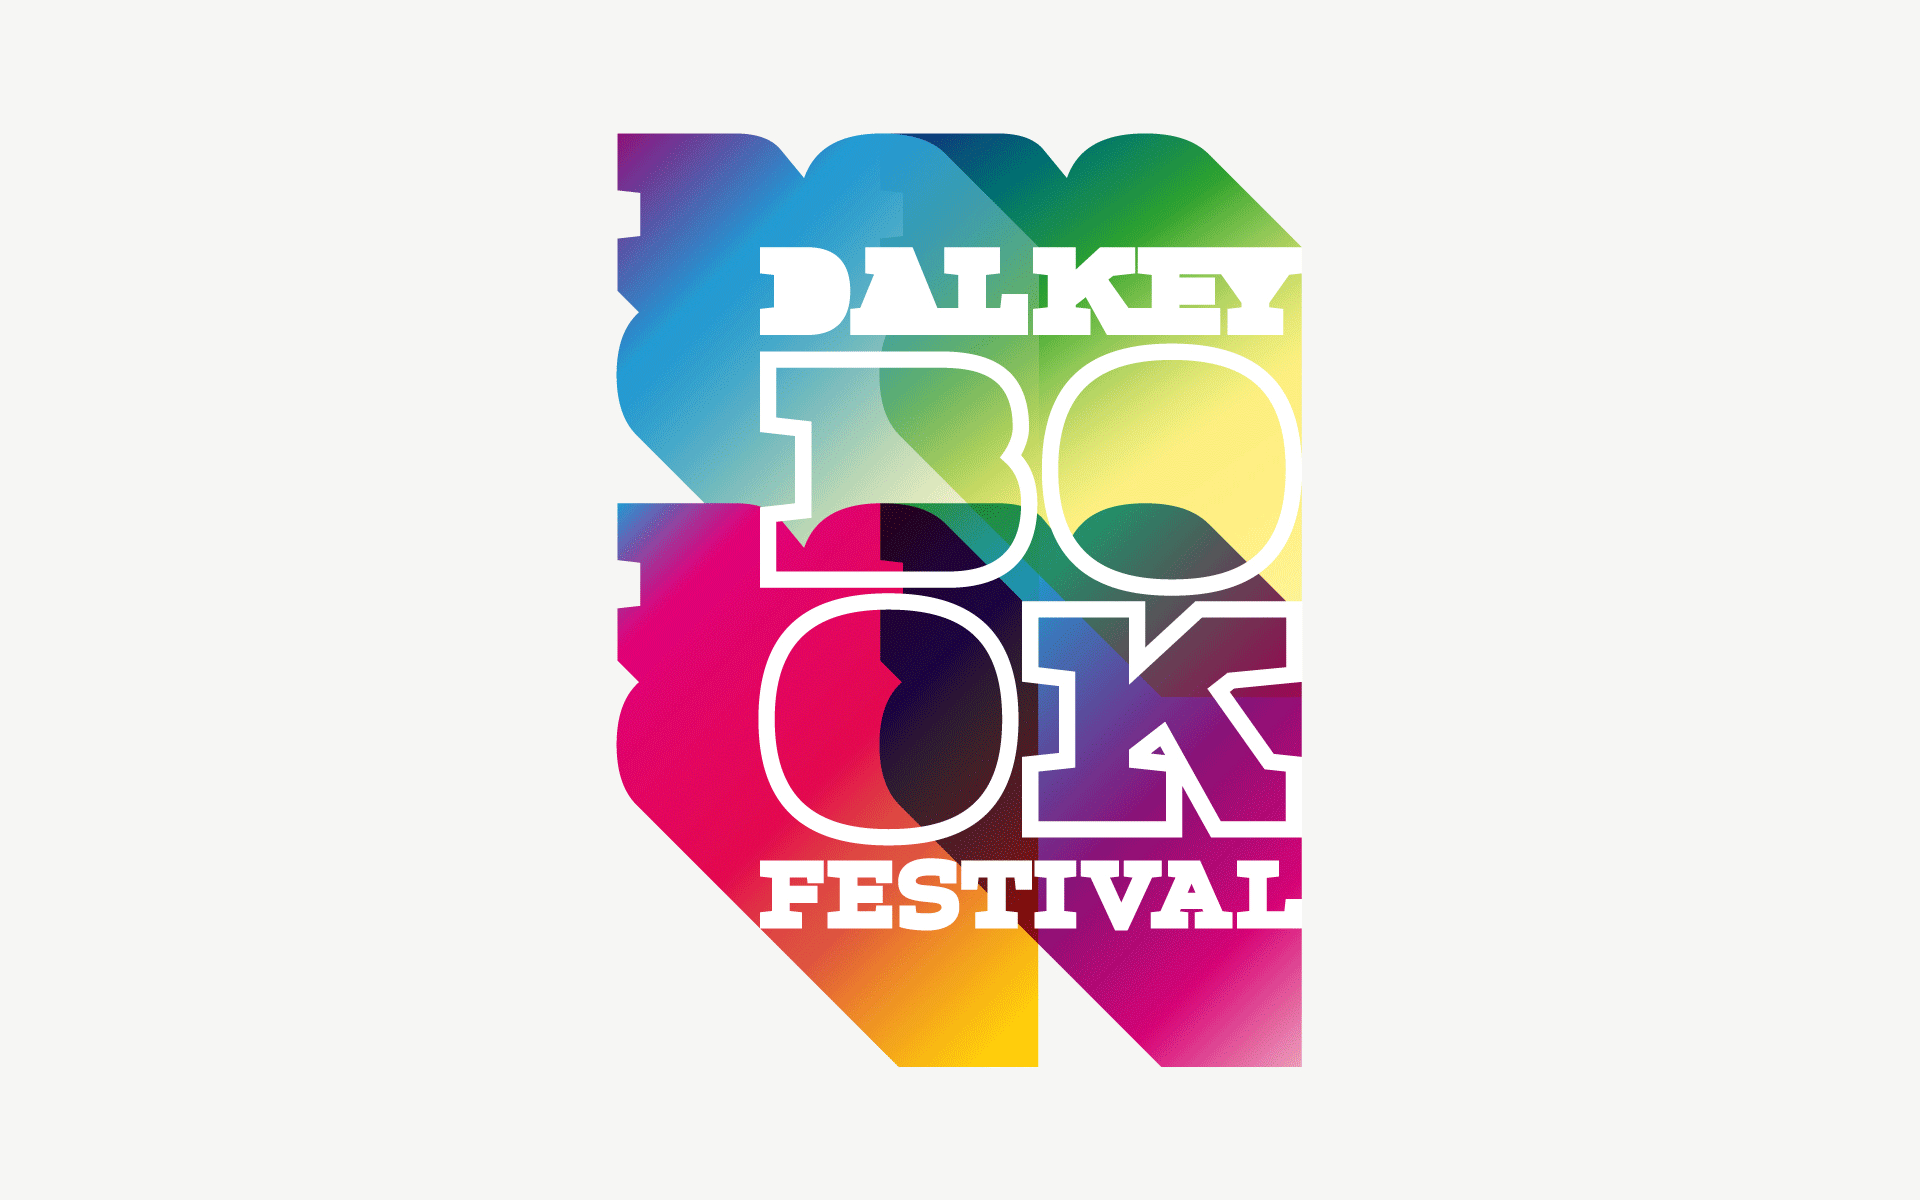 Dalkey Book Festival visual identity